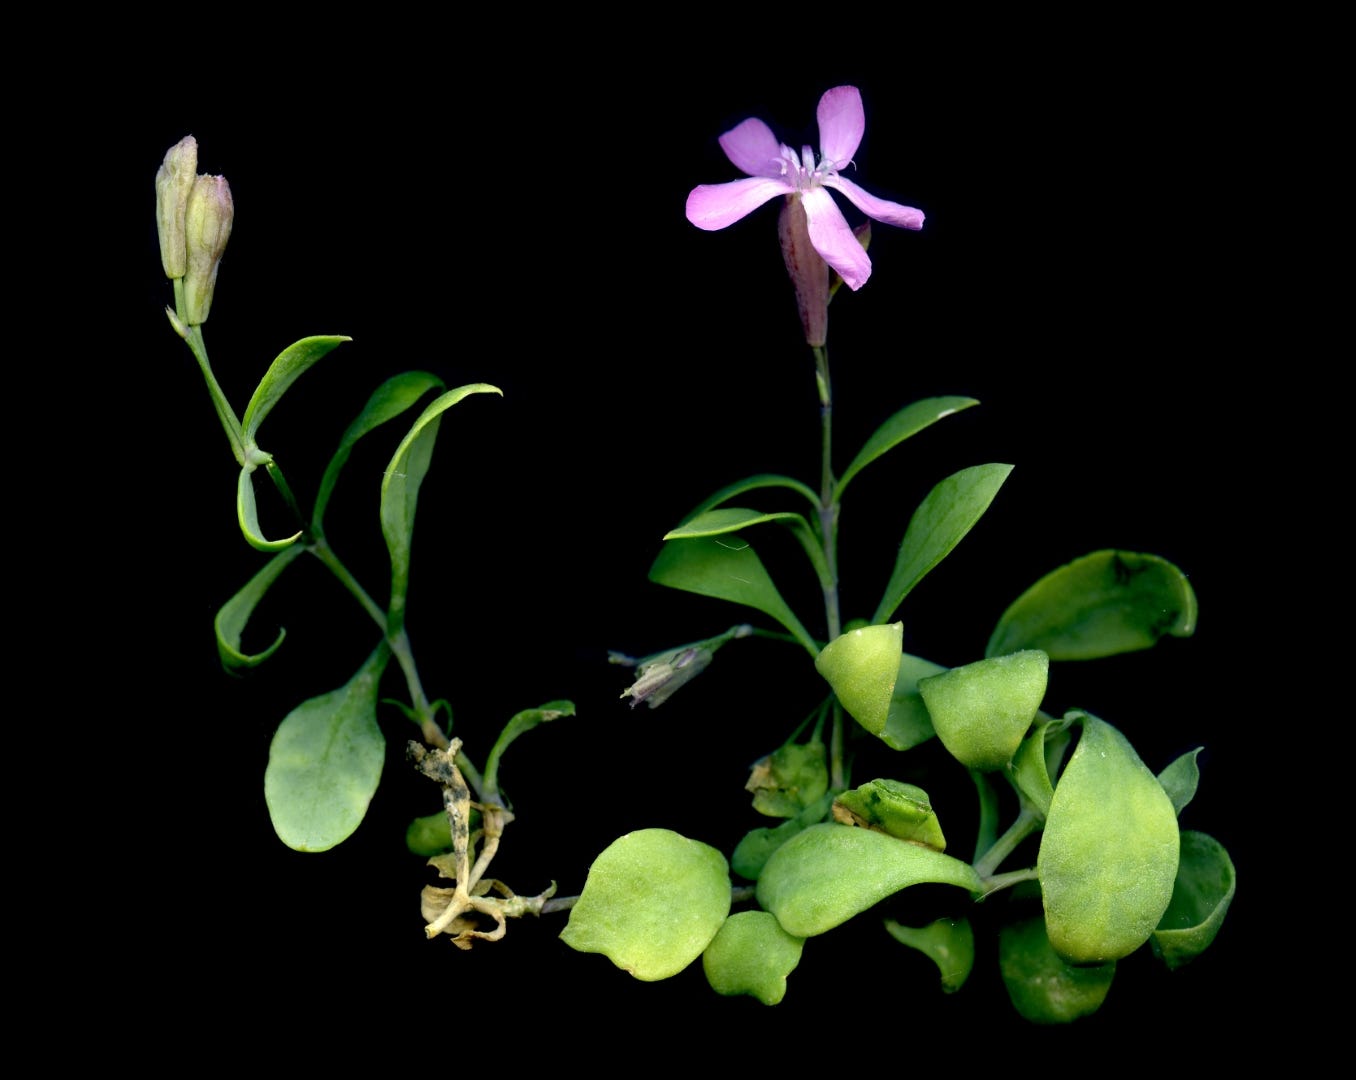 Exemplar de Petrocoptis crassifolia subsp. montsicciana, o Clavell de Balma. Fotografia de P. Barnola E. (floracatalana.cat).